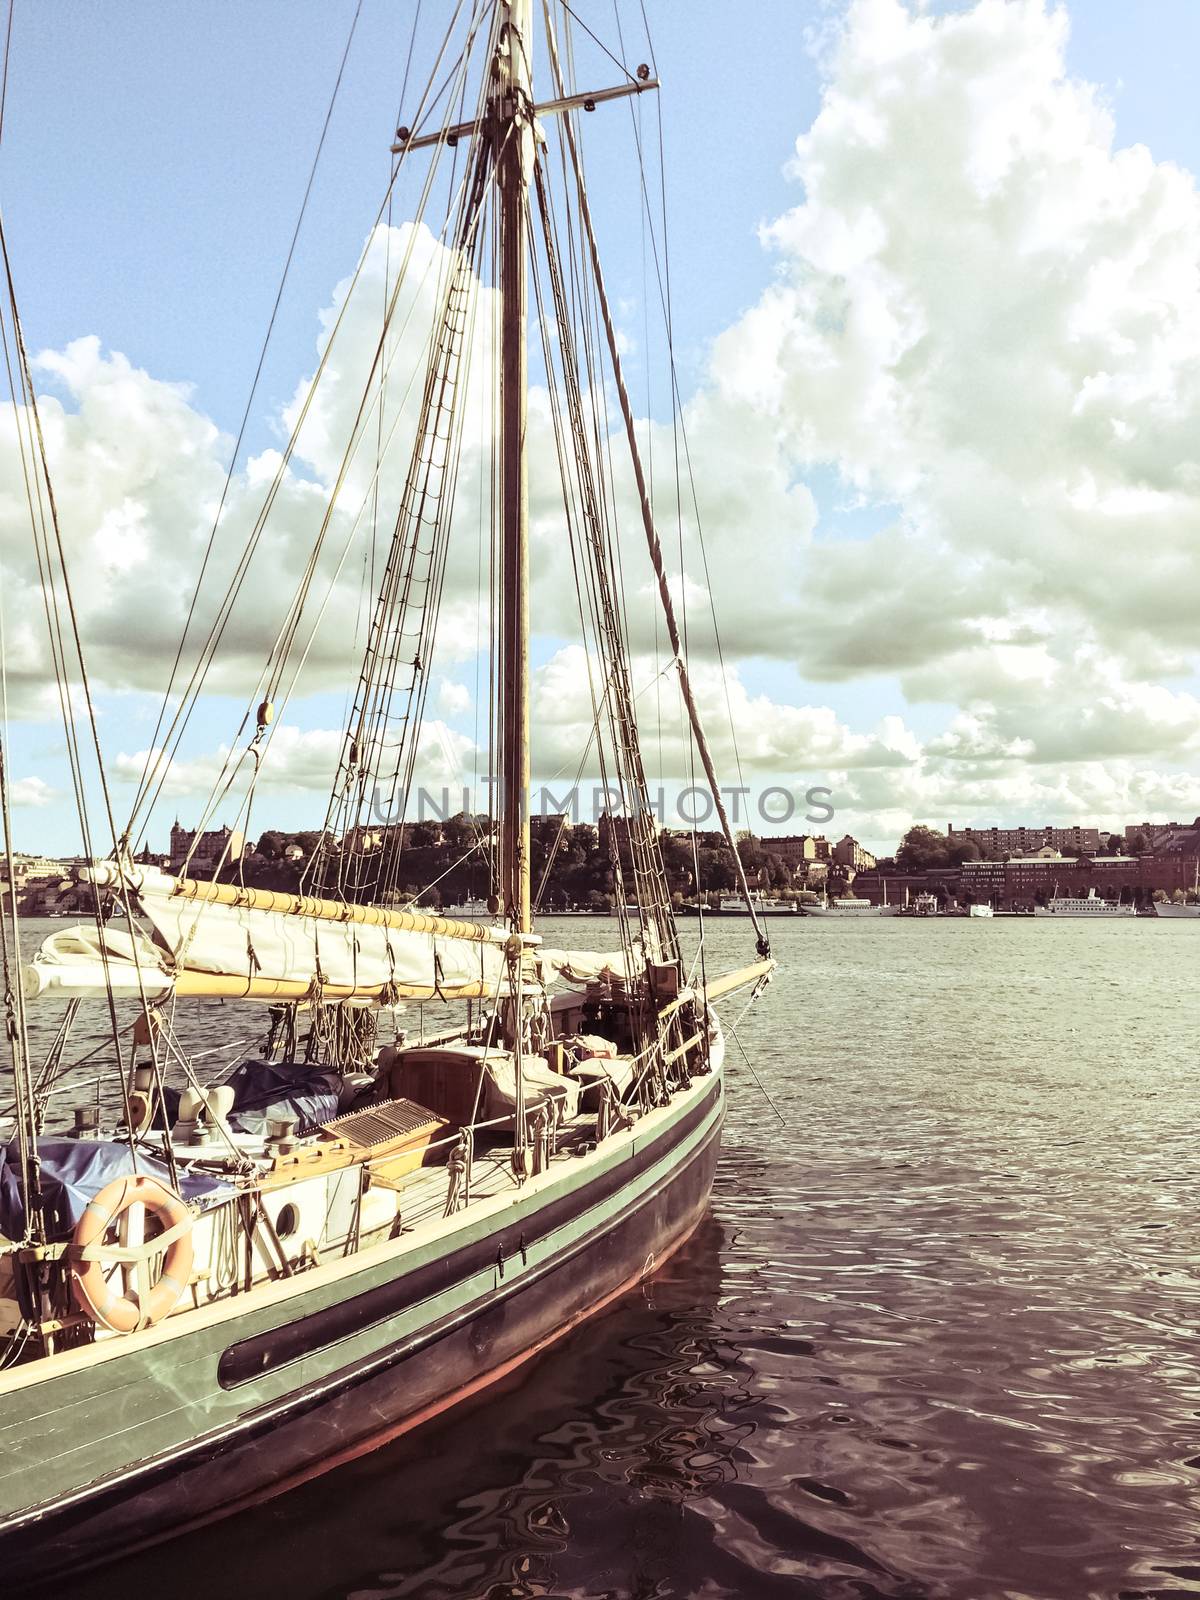 Sailboat near Stockholm, Sweden. Retro styled image.